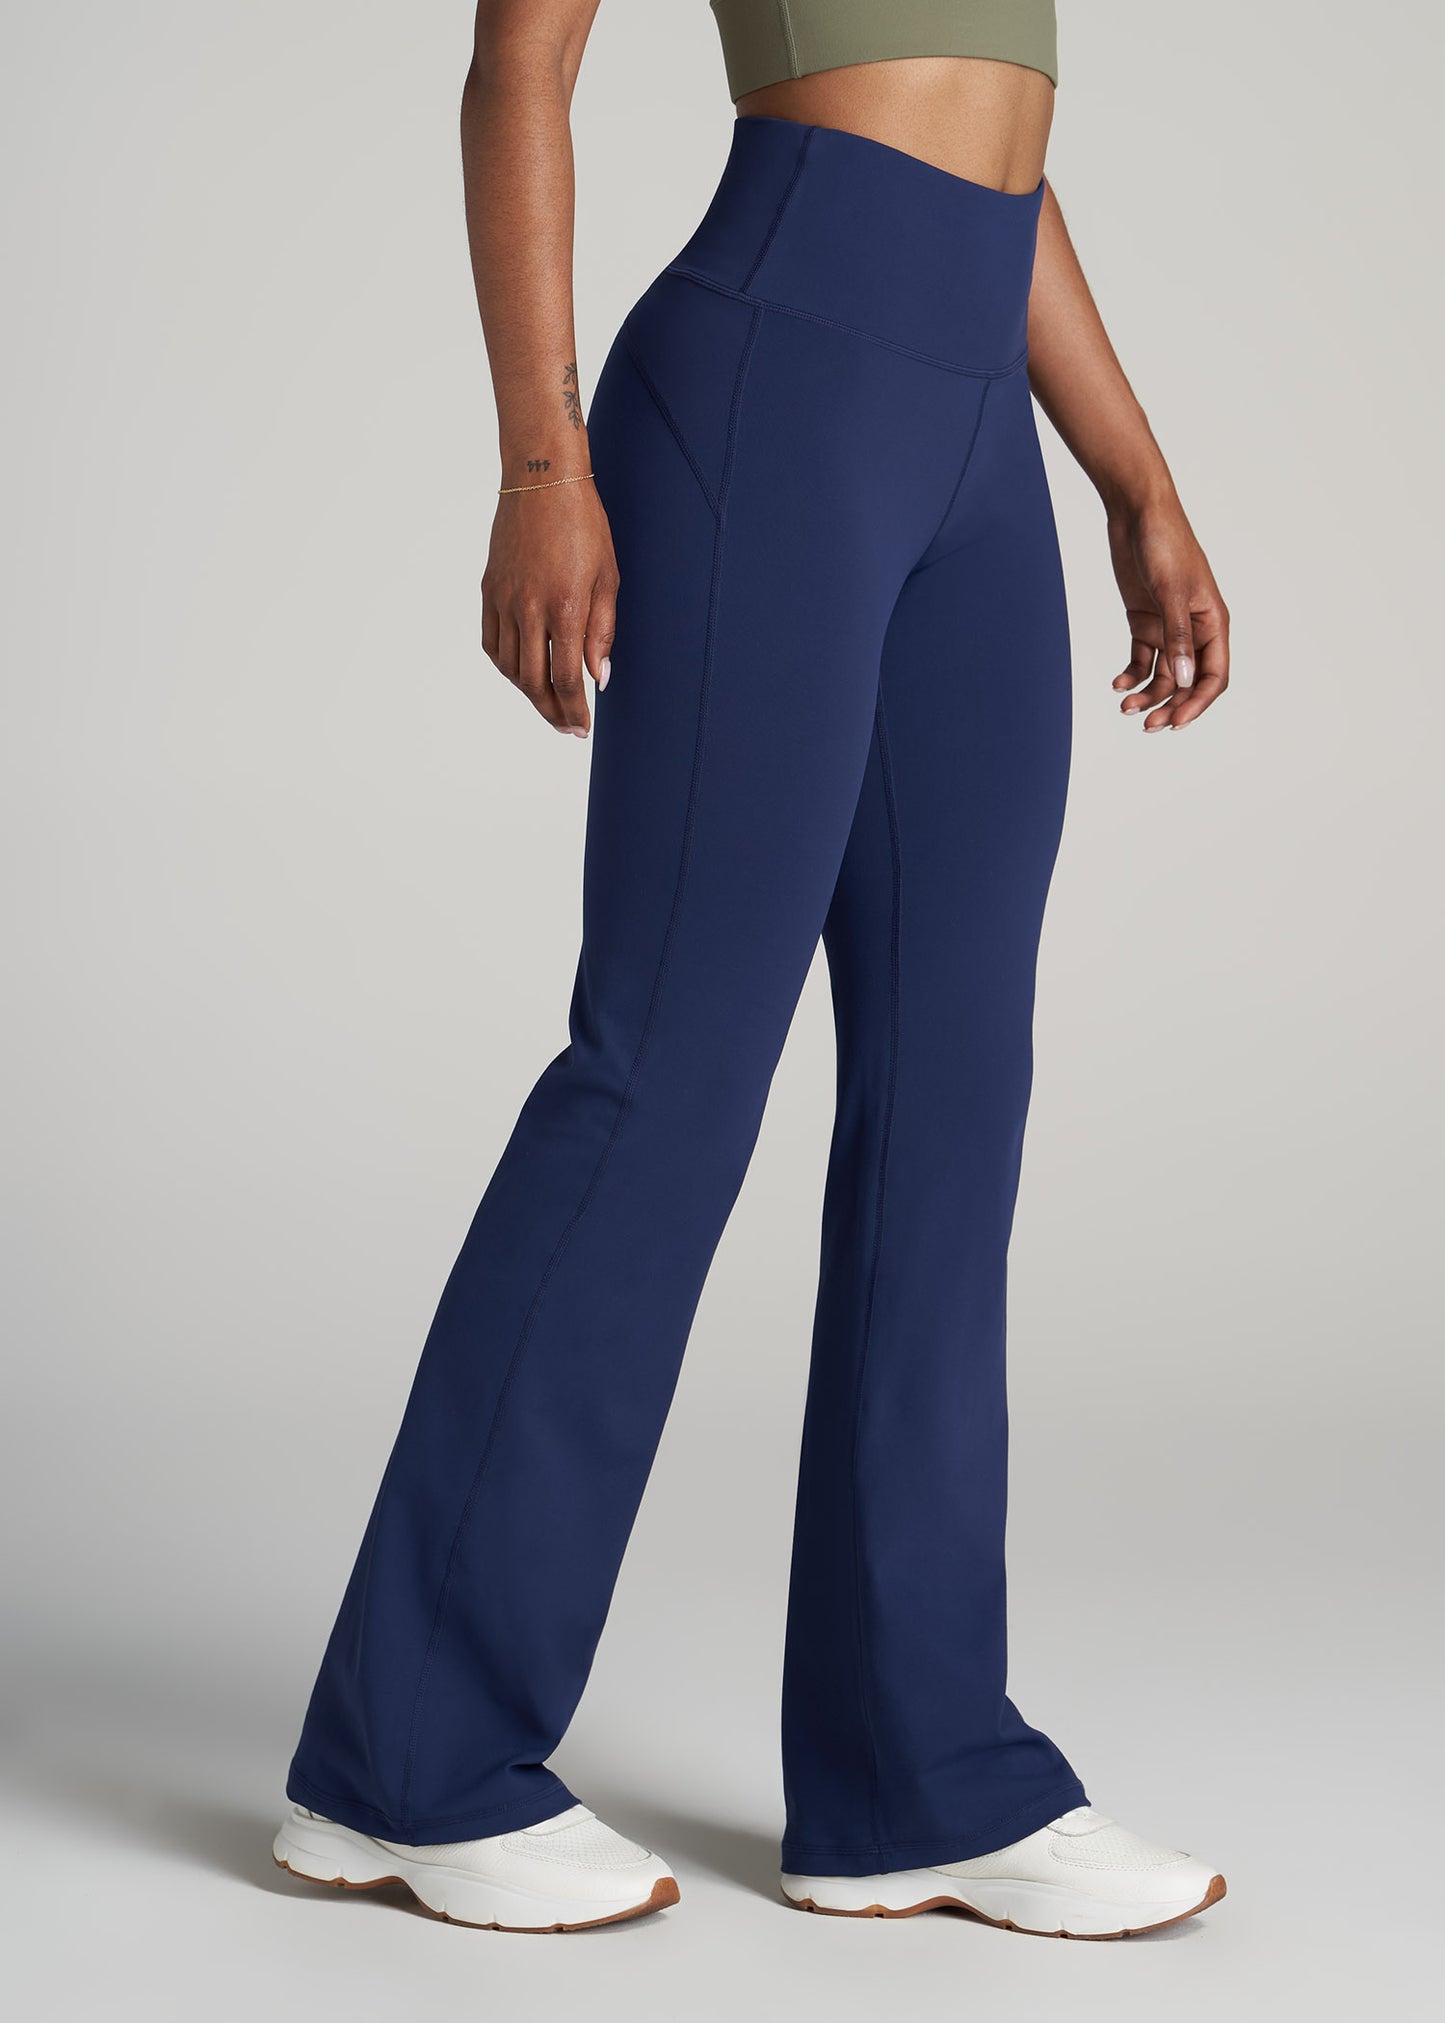 Gaia Yoga Pants - Navy Blue, Women's Trousers & Yoga Pants